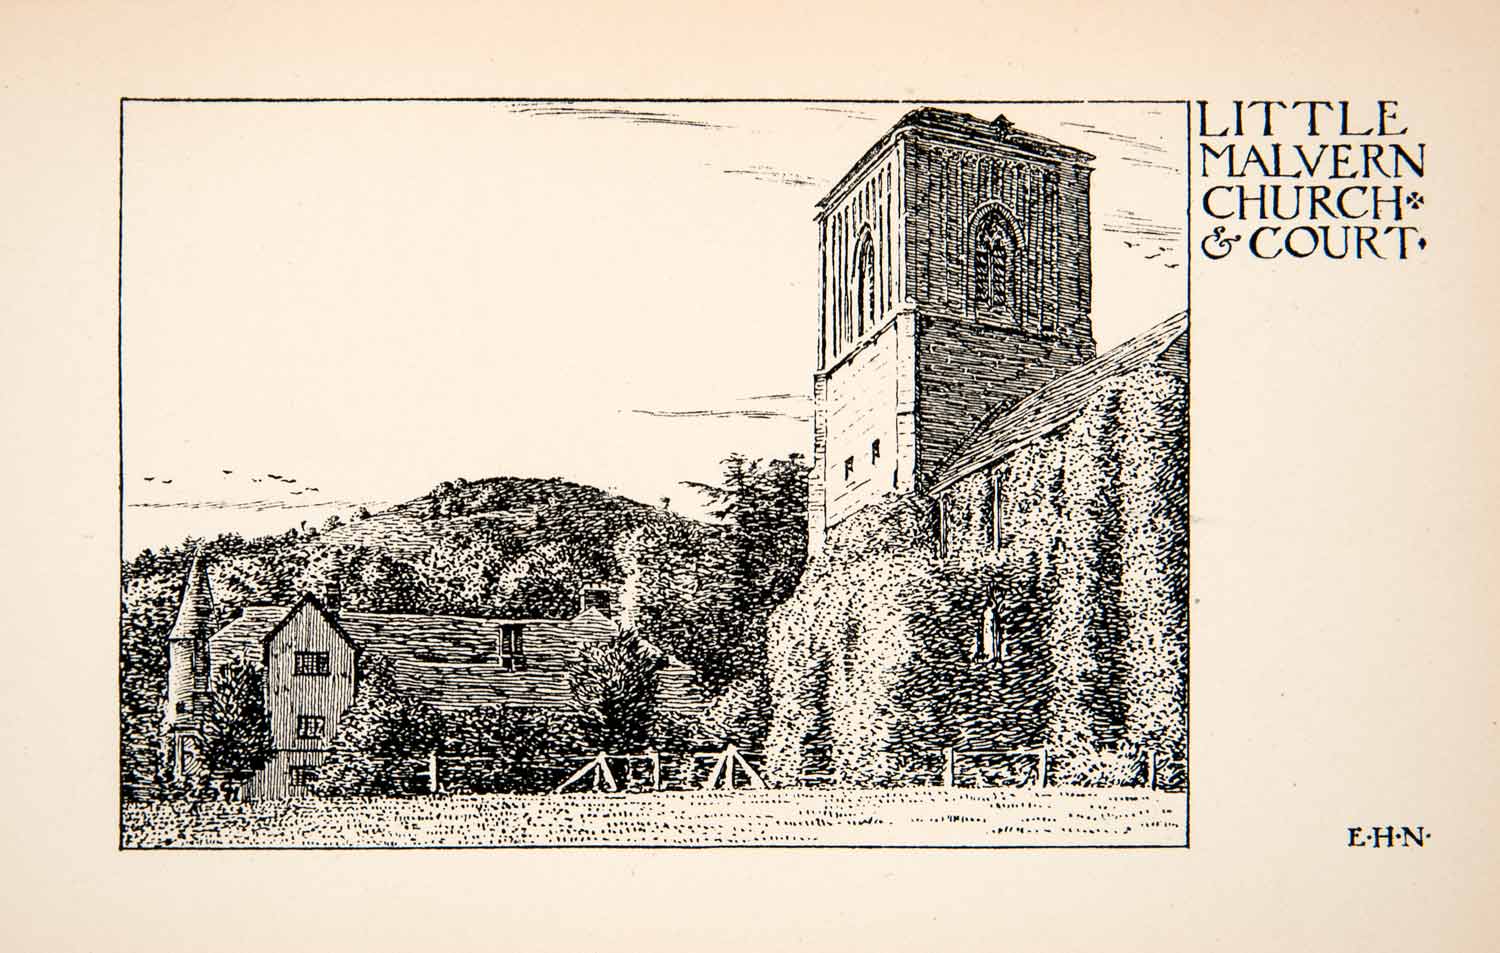 1901 Etching Little Malvern Church Court Worcestershire England Edmund New XGVB5